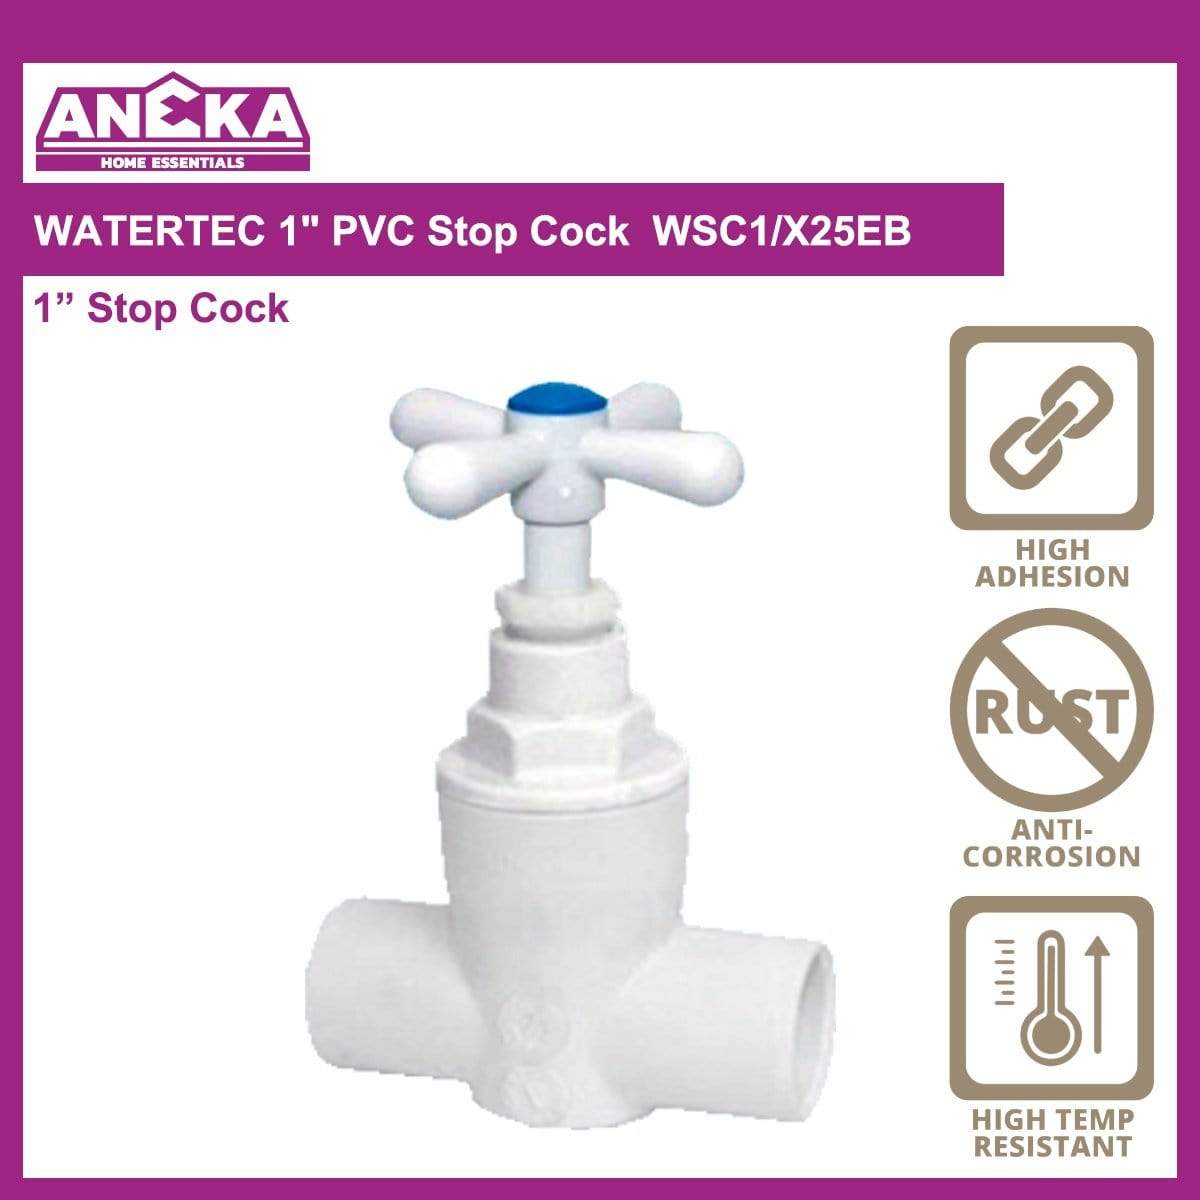 WATERTEC 1" PVC Stop Cock WSC1/X25EB